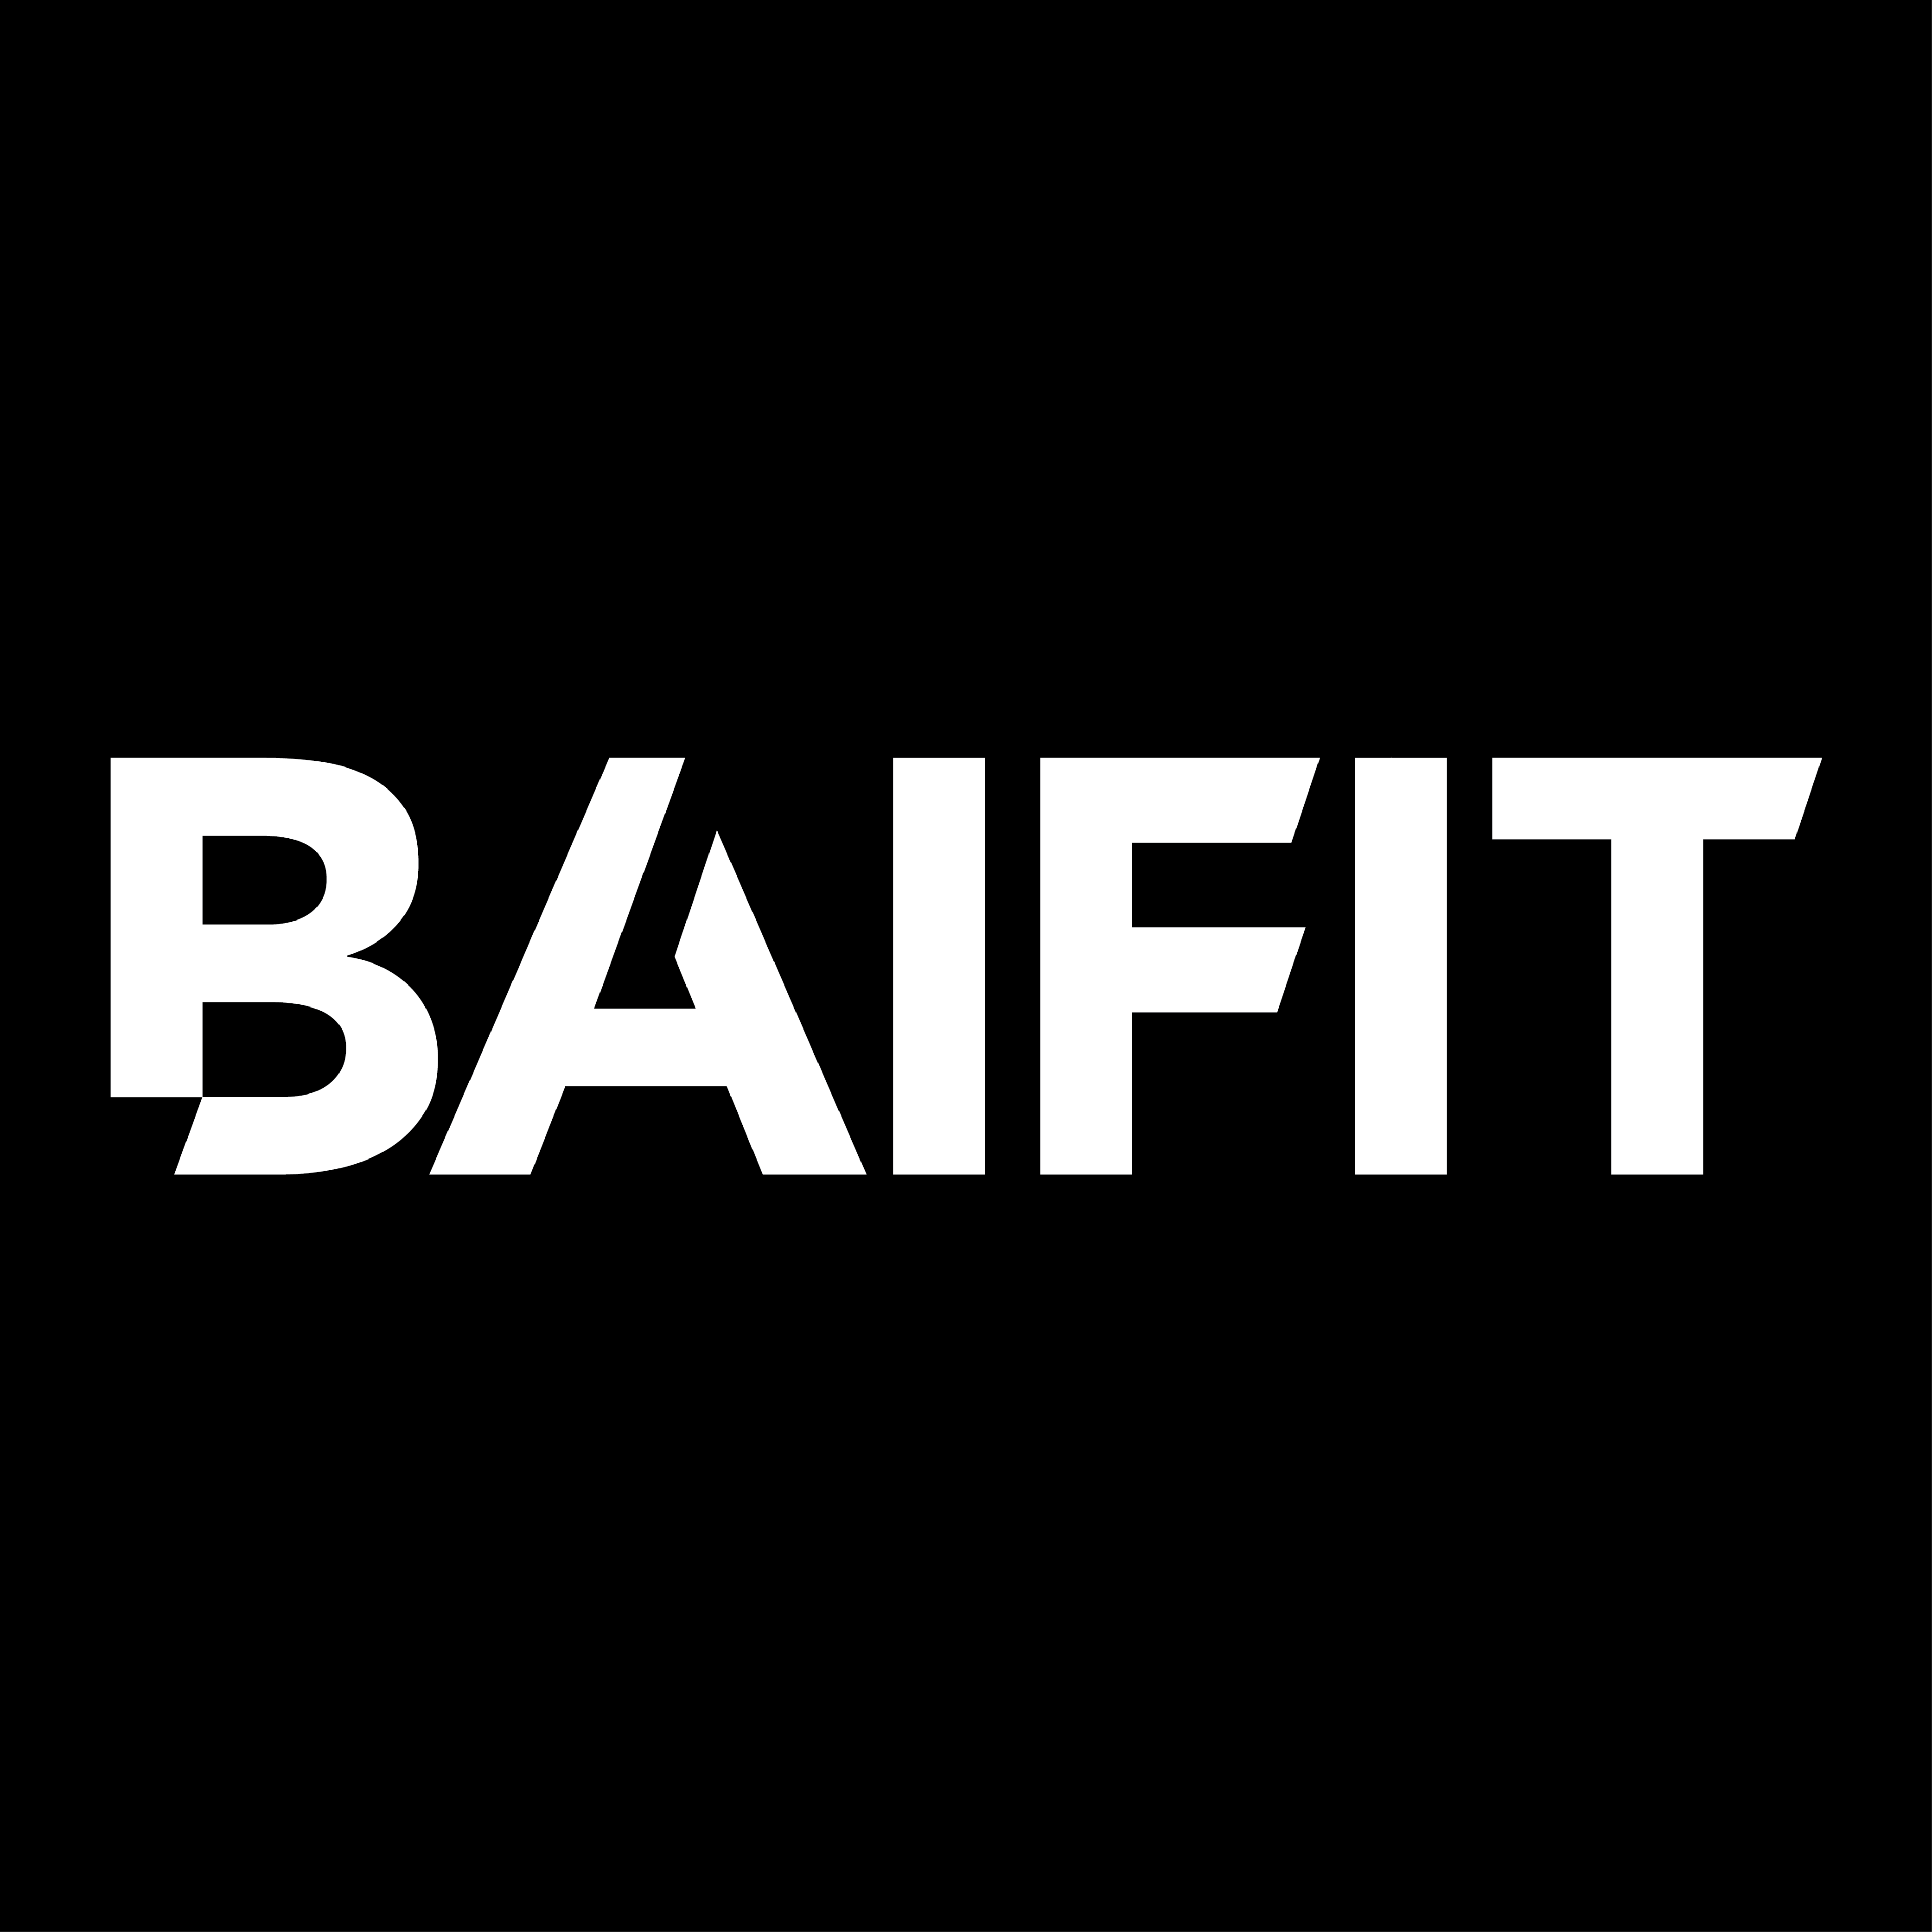 BAIFIT logo